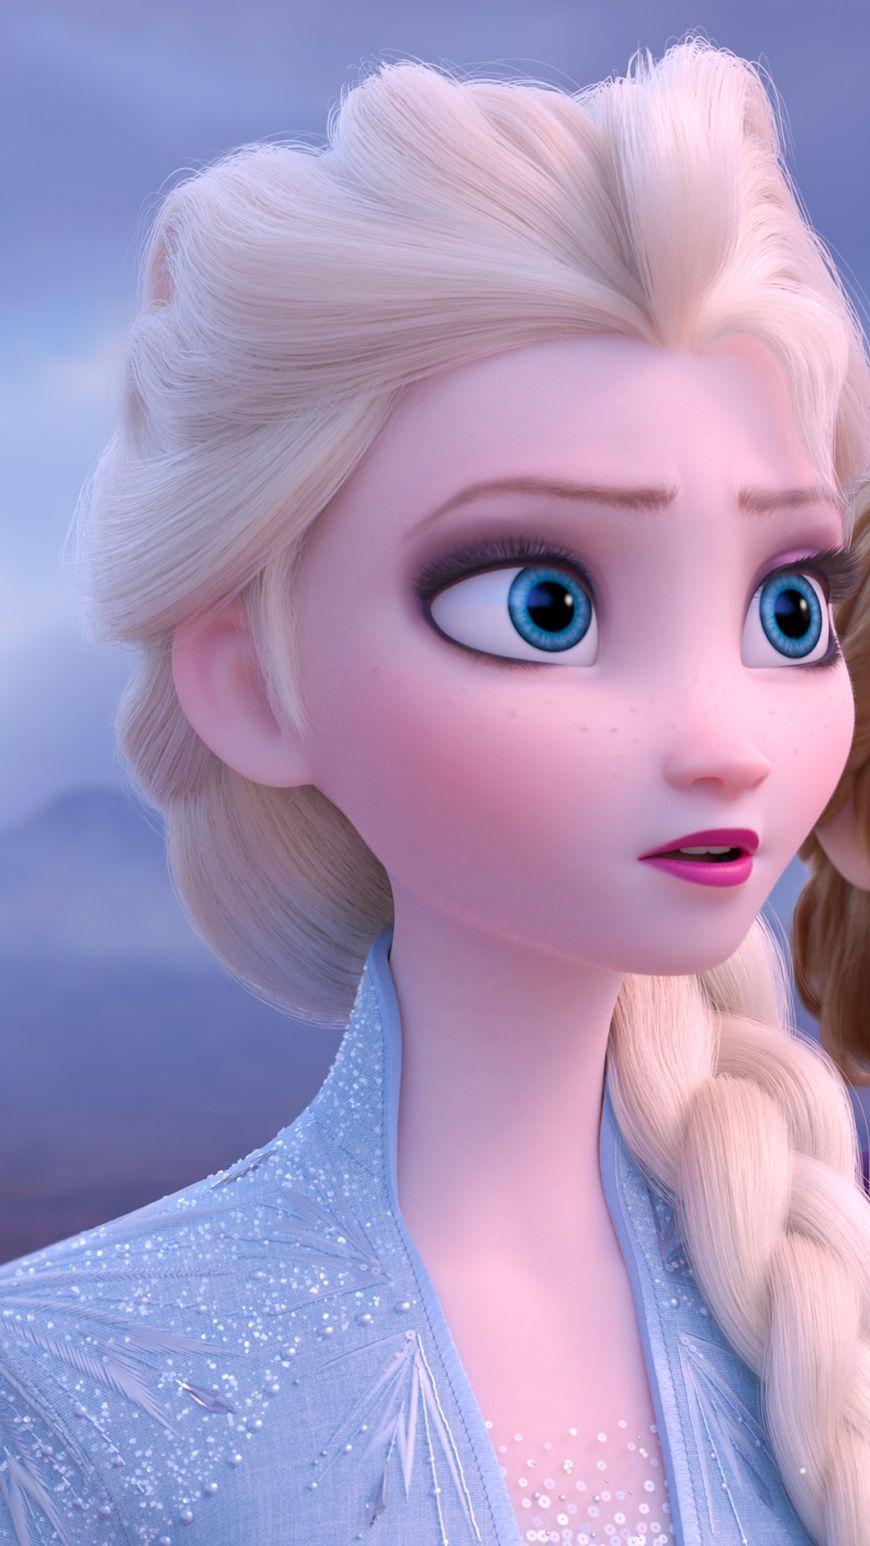 Disney Frozen 2 mobile phone wallpaper. Disney princess art, Disney princess wallpaper, Disney princess frozen